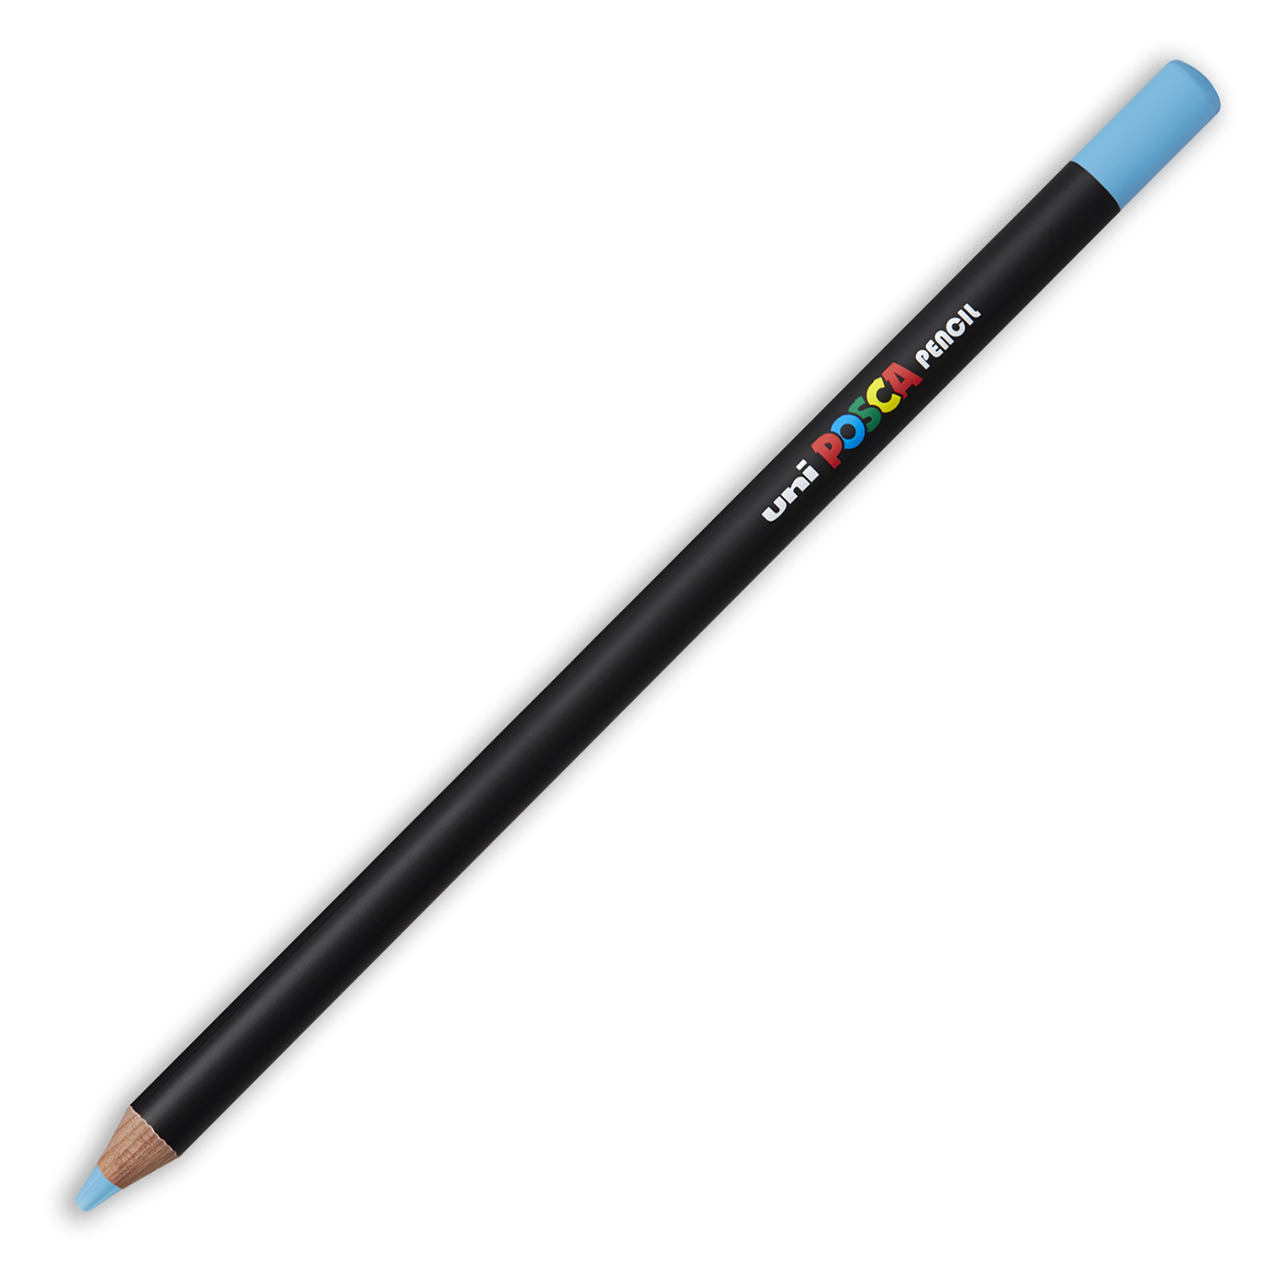 uni® POSCA® Oil-Based Colored Pencils (36 Pack)